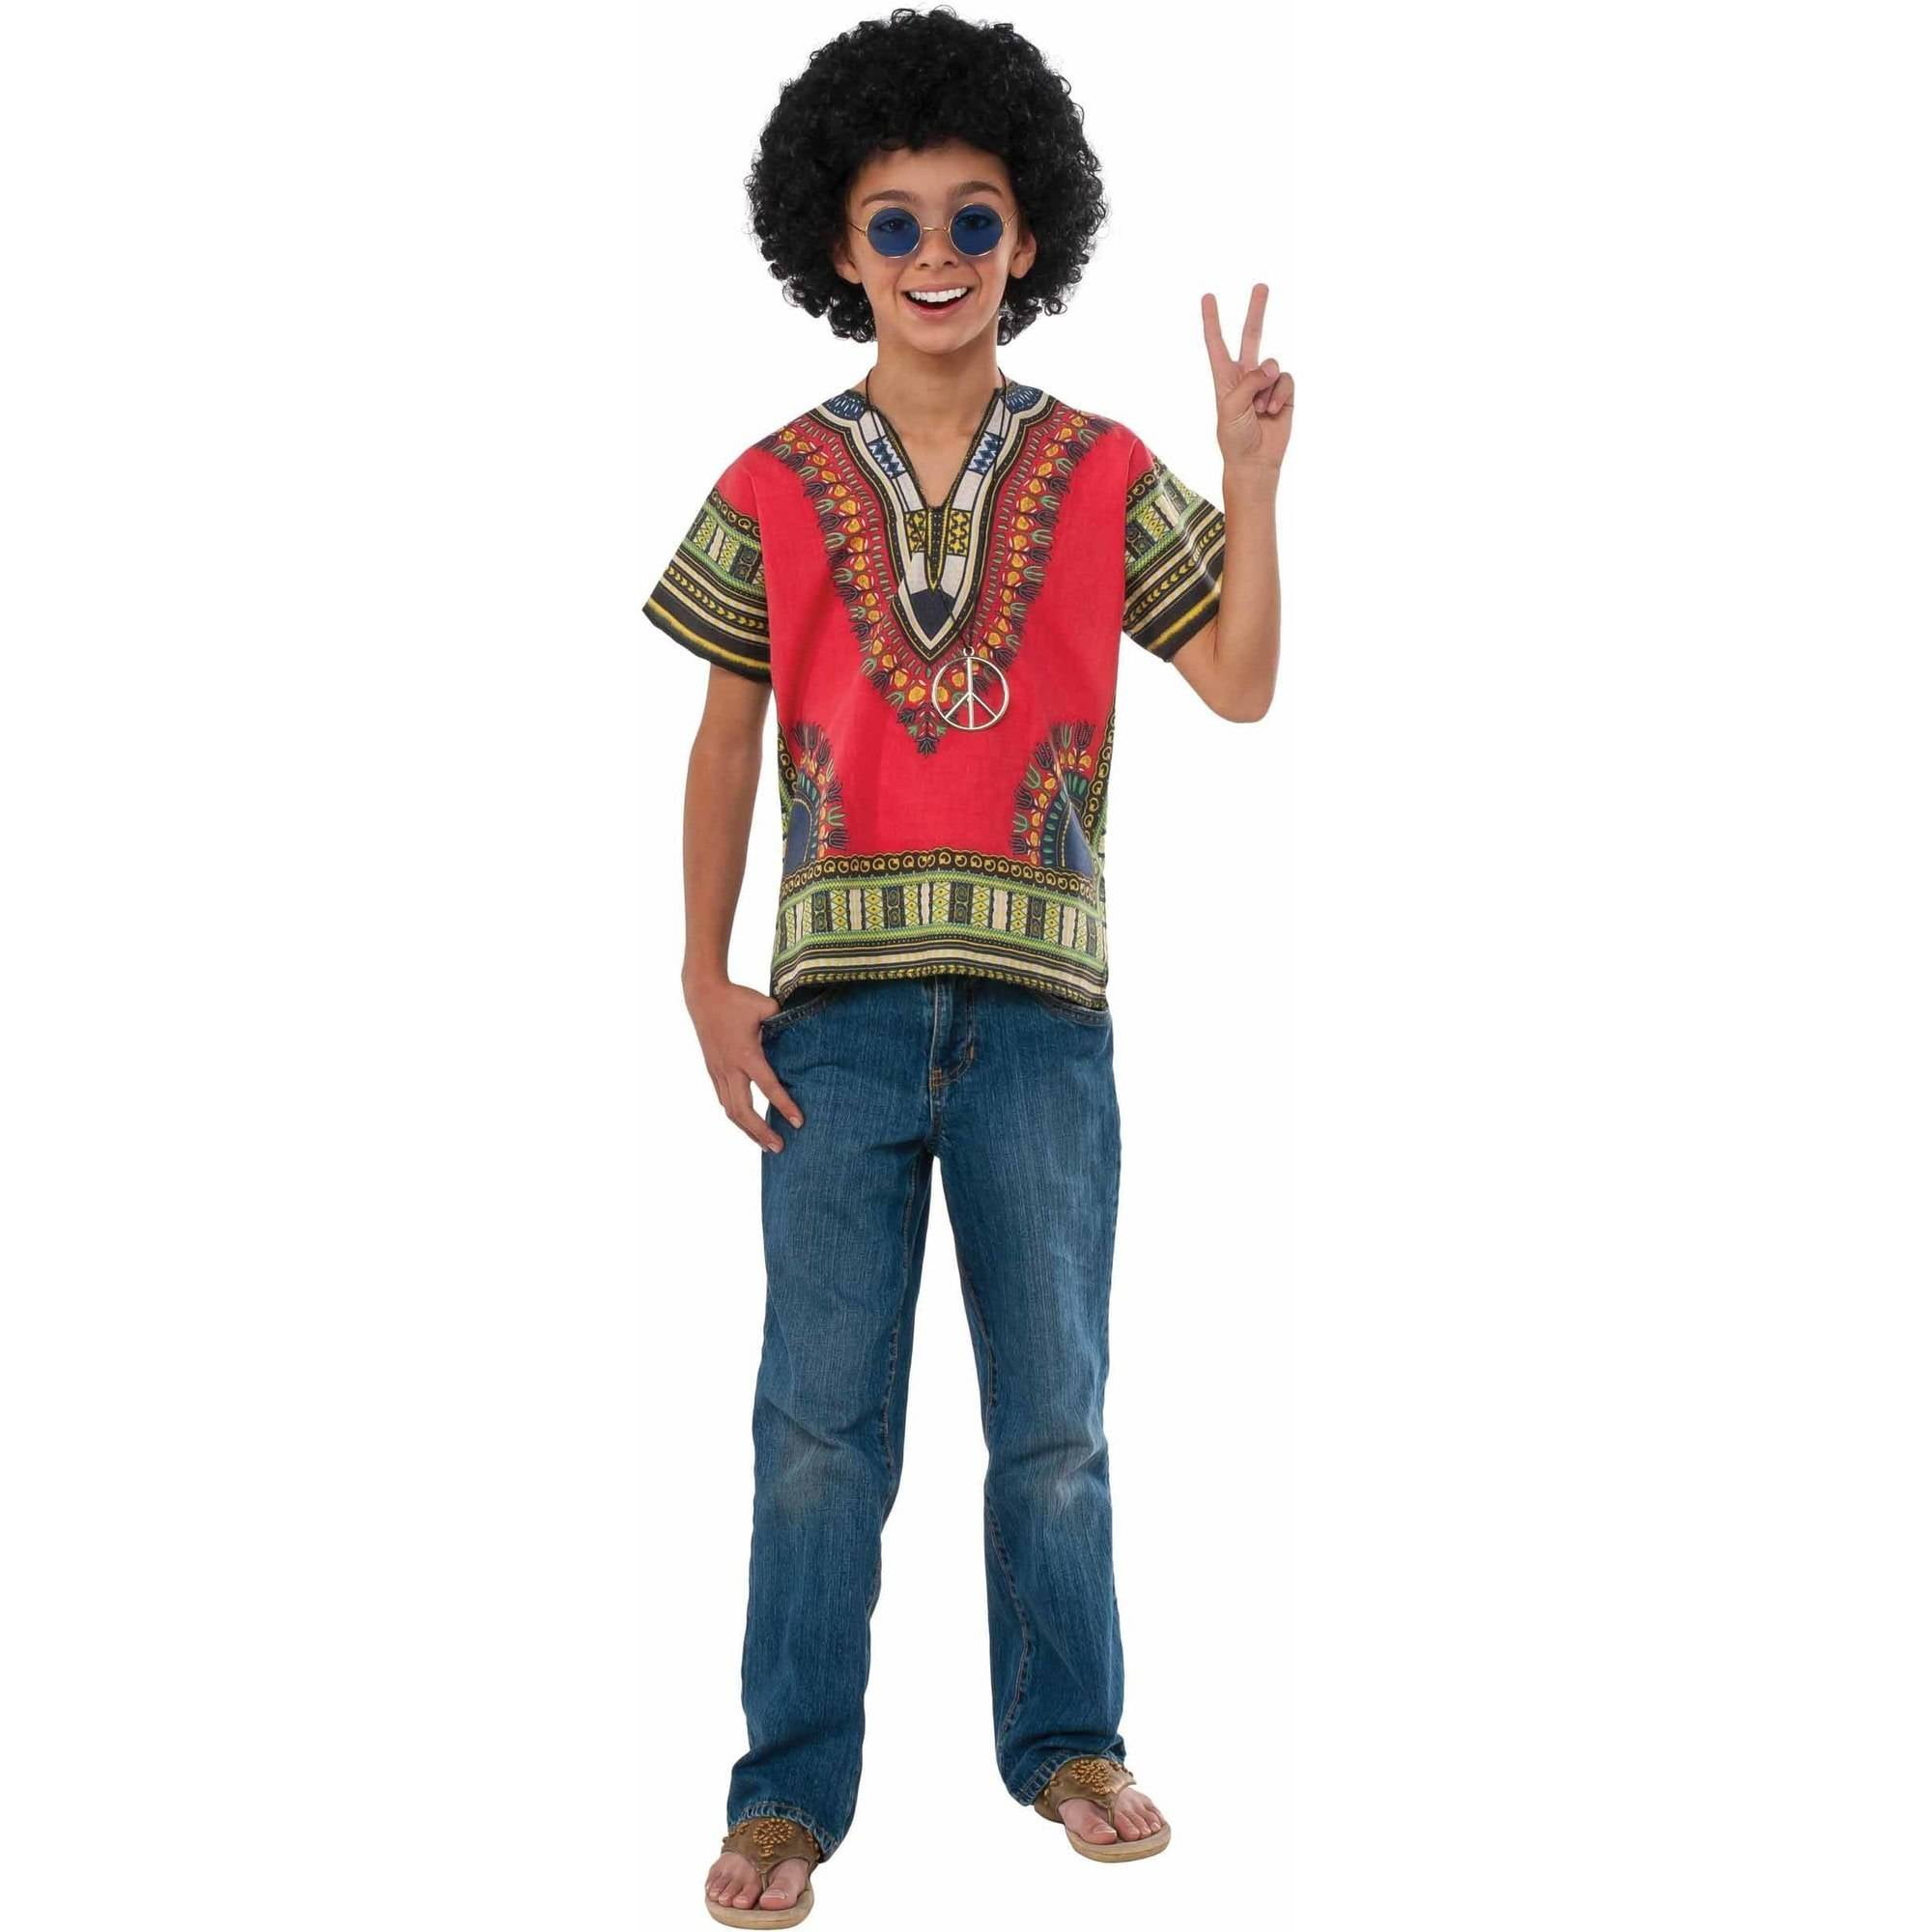 Hippie Child's Costume, Small (4-6) - Walmart.com - Walmart.com